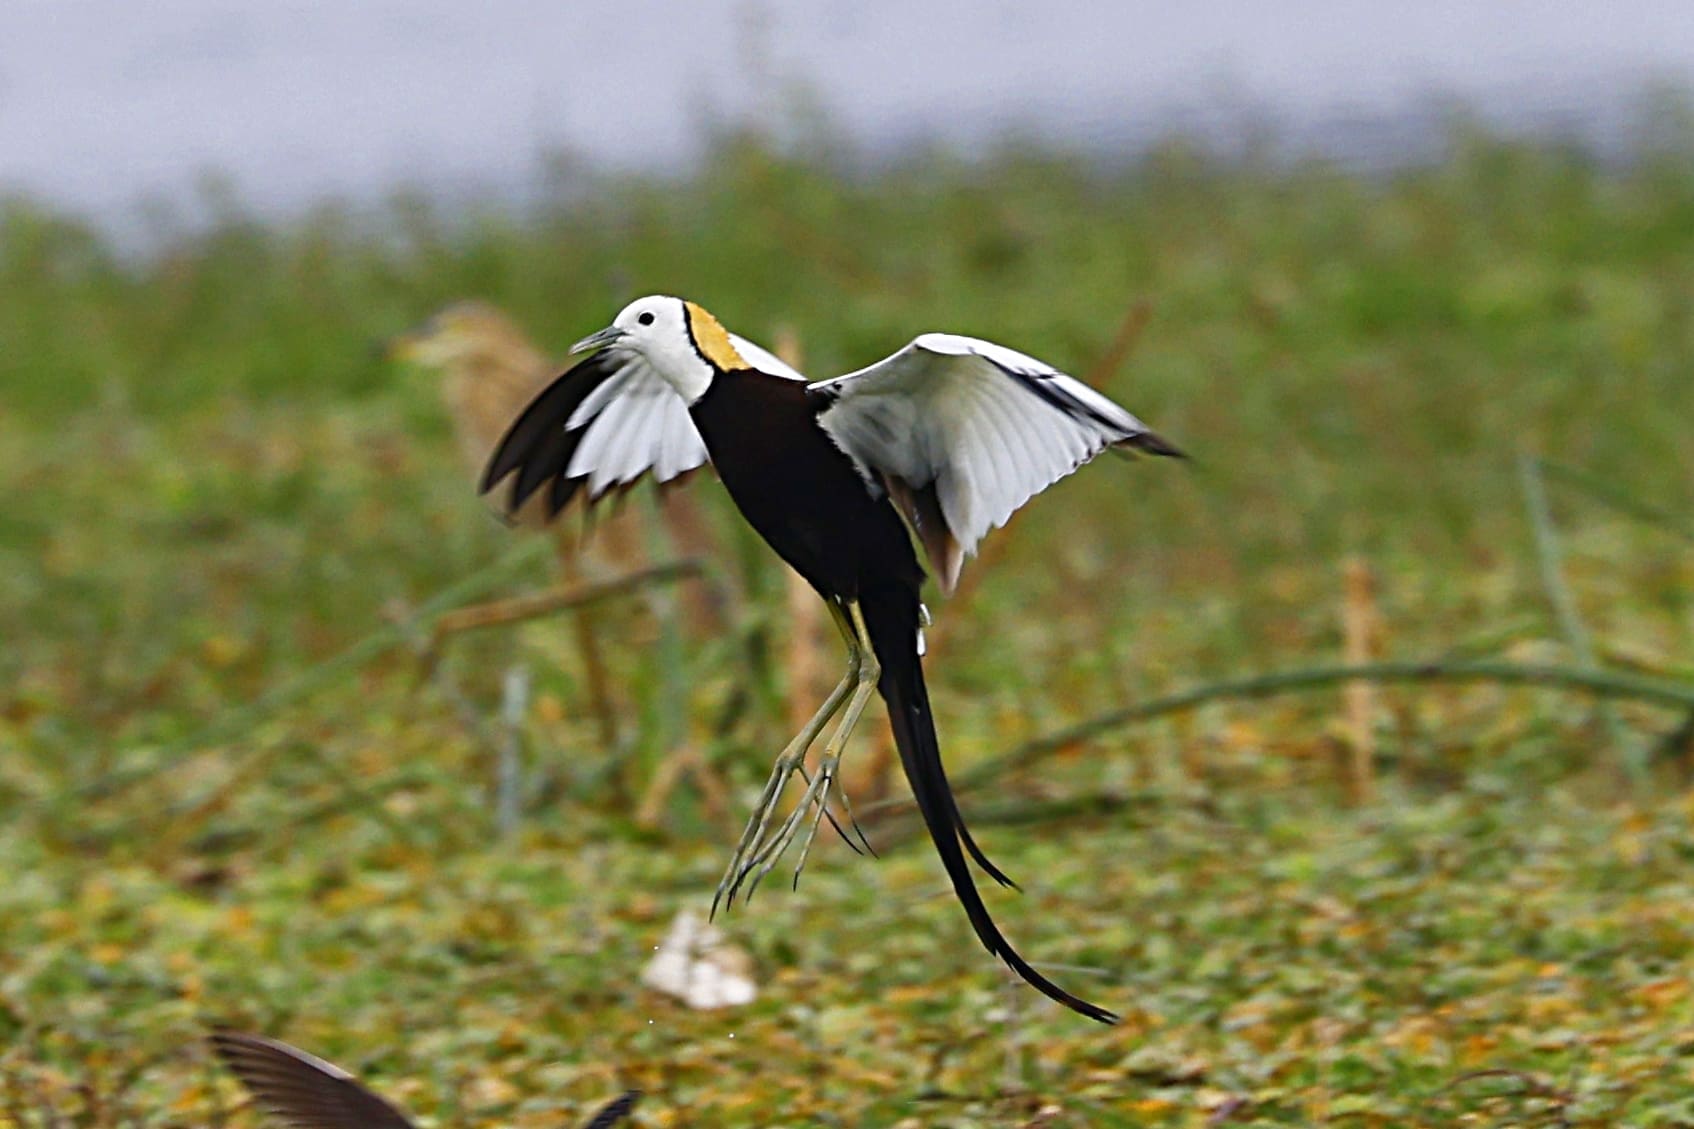 Pheasant-tailed Jacana at Saul Kere